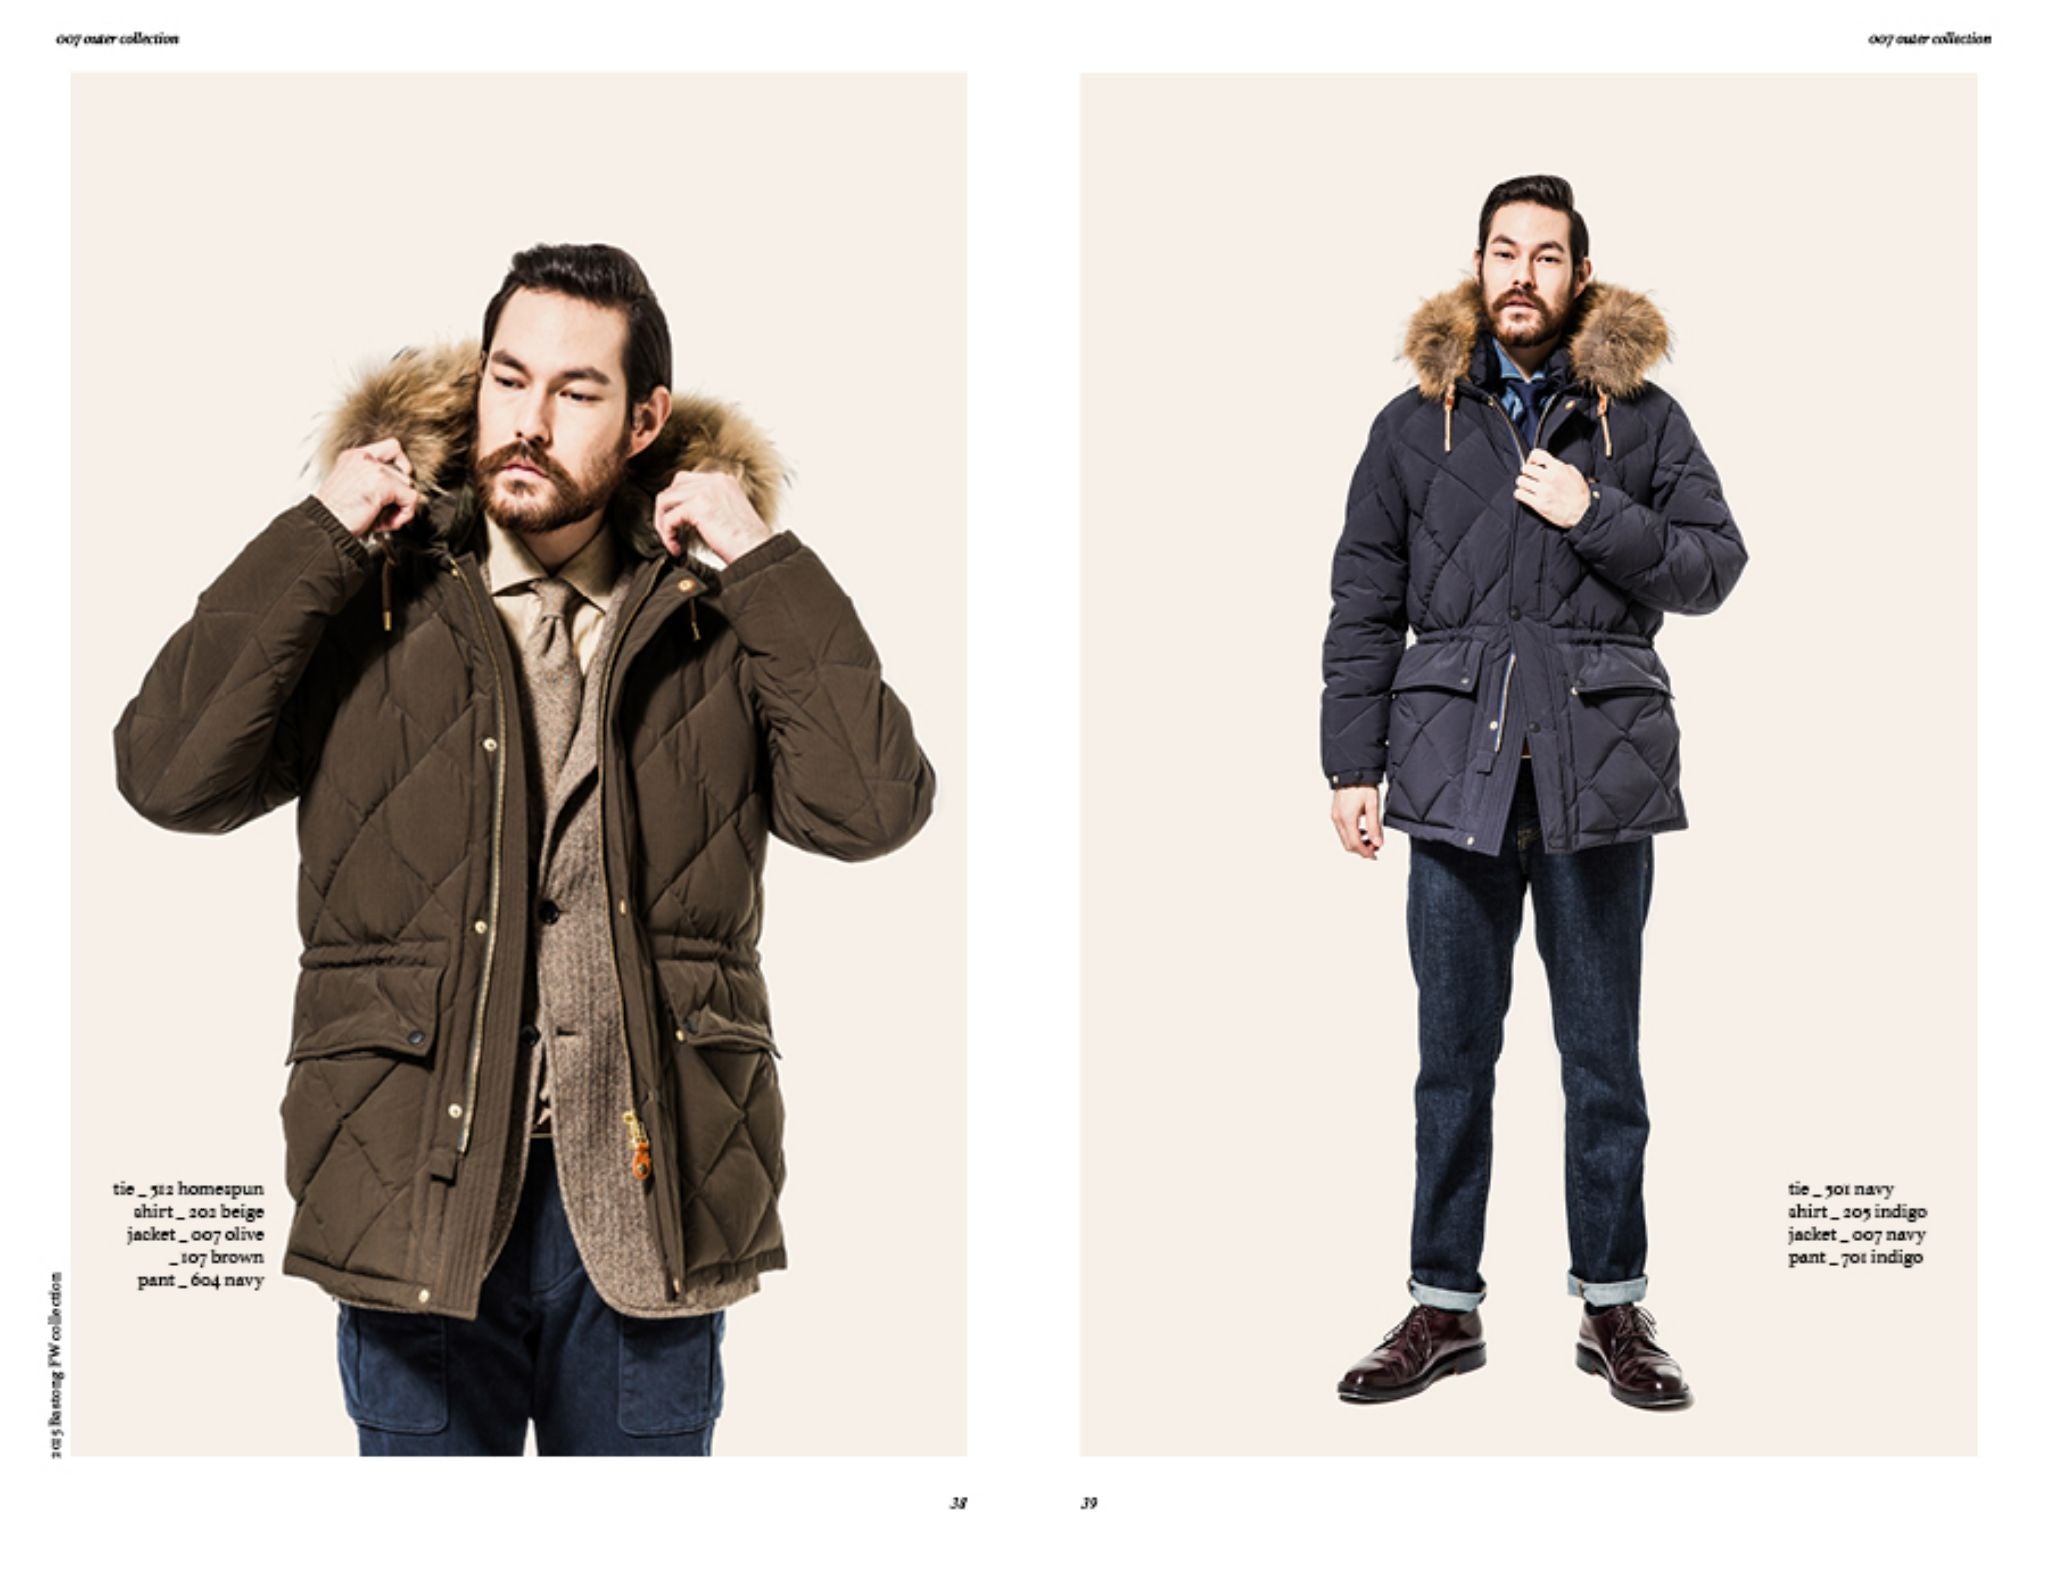 Bastong fw15 lookbook - down parka jacket for winter